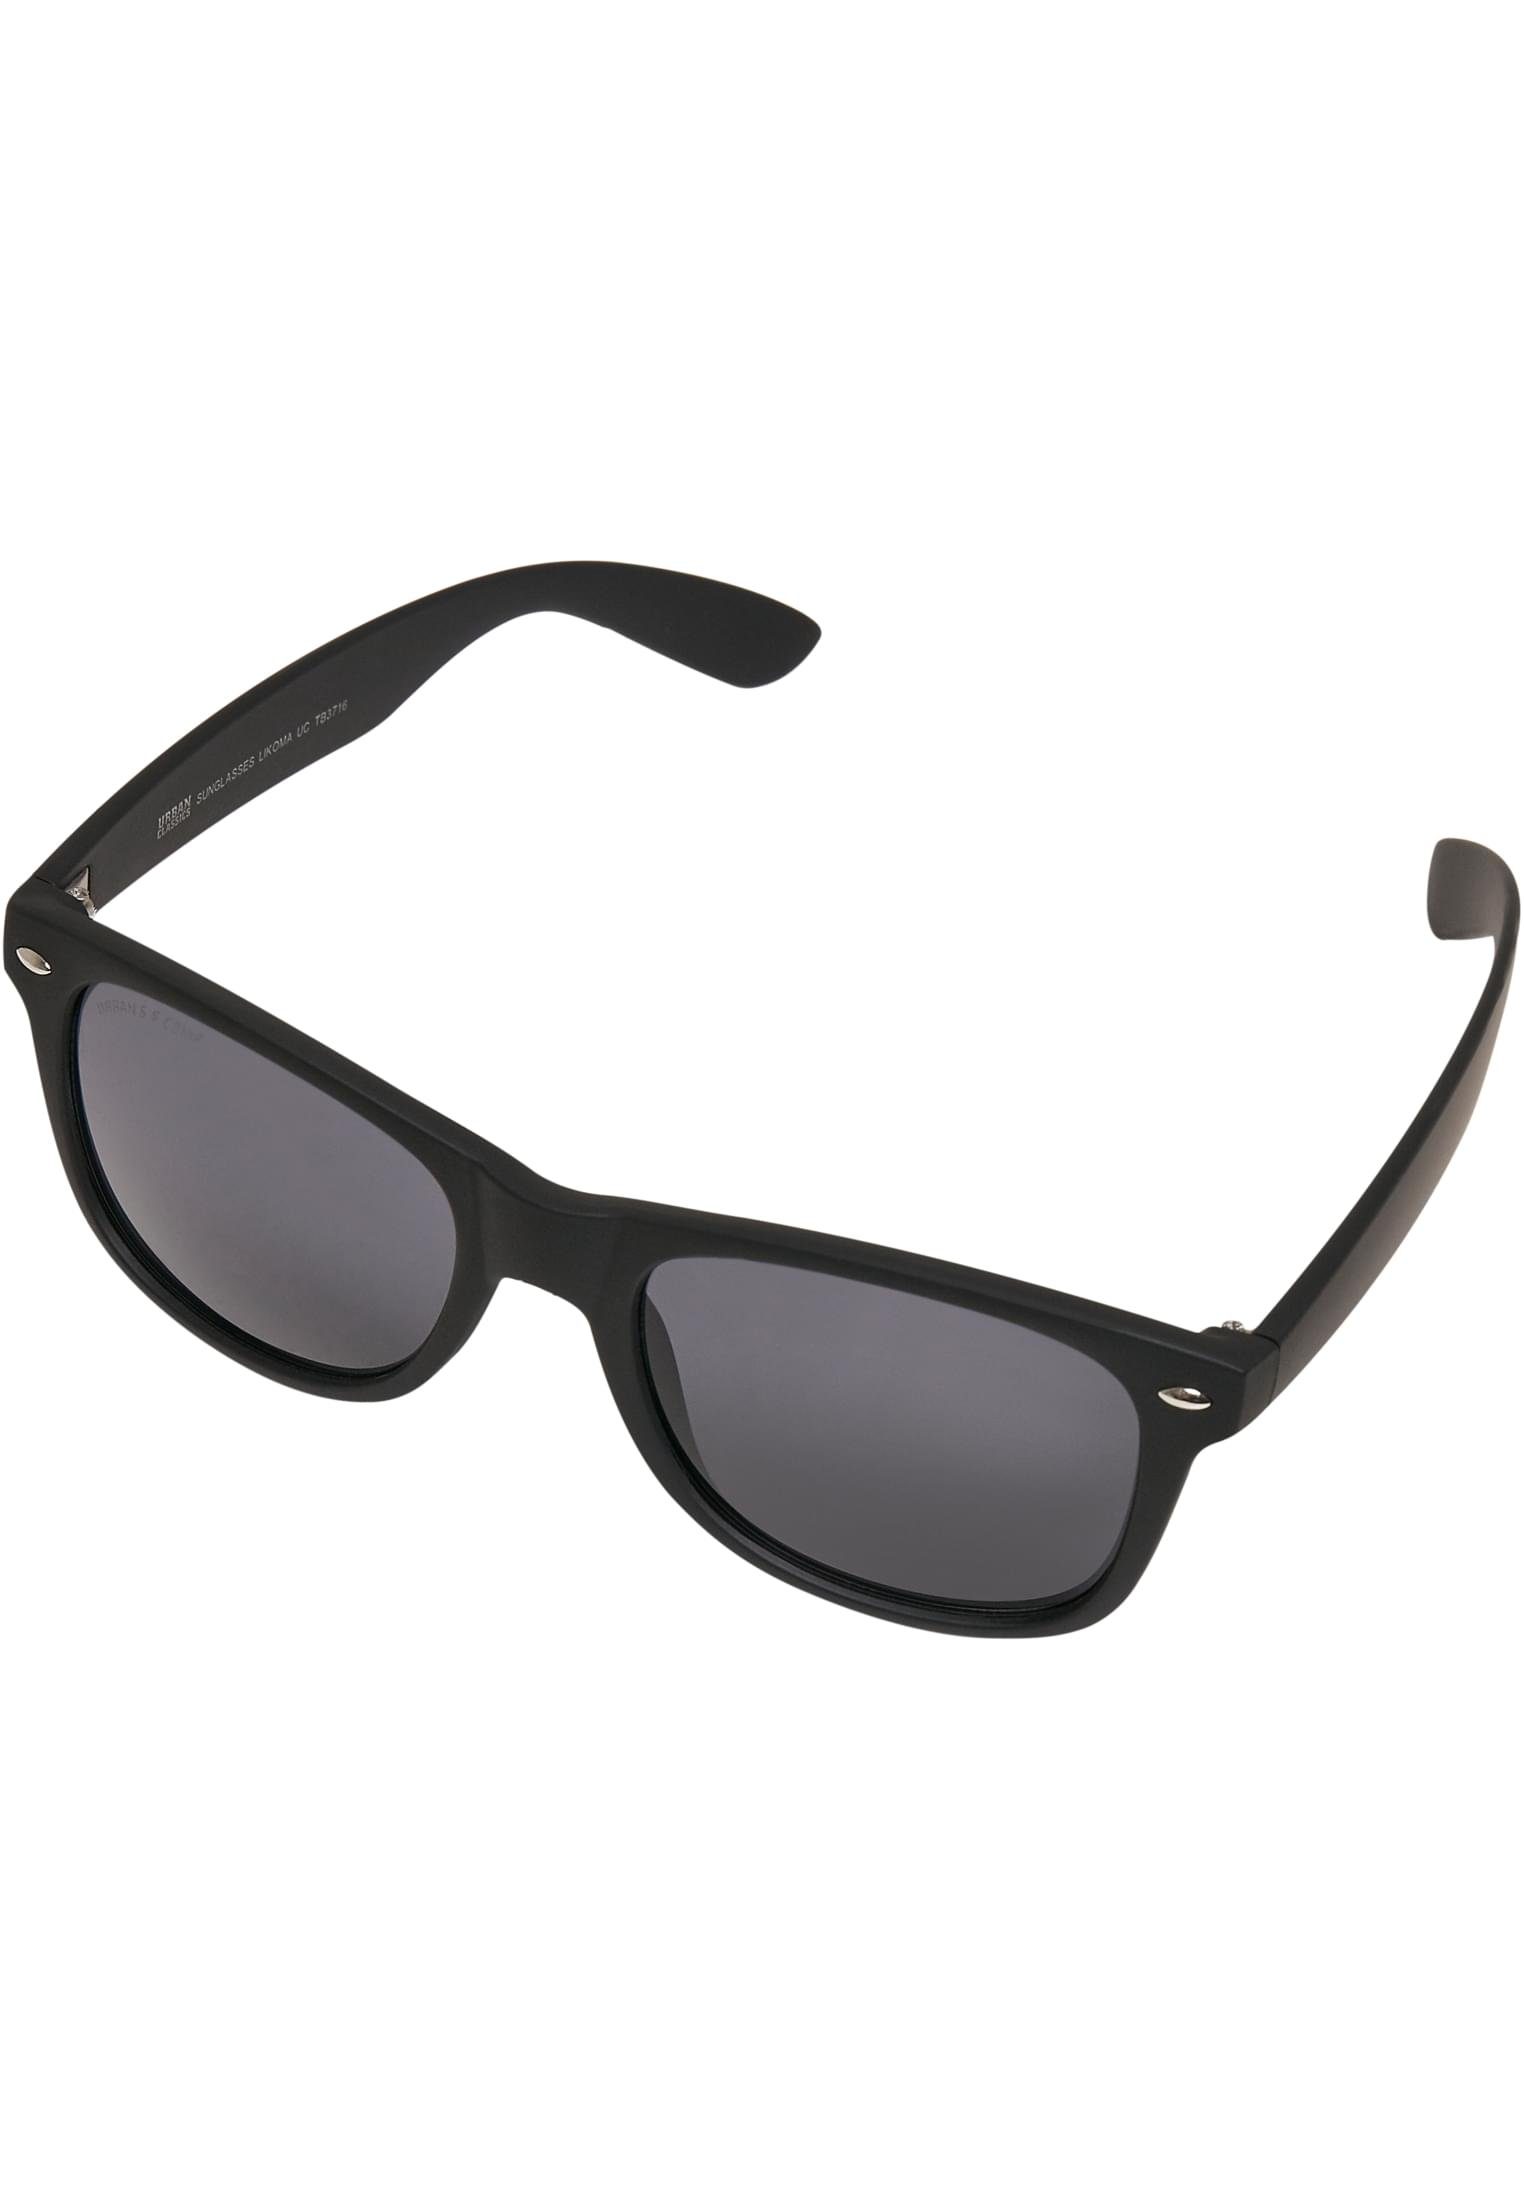 Sonnenbrille Likoma CLASSICS Sunglasses UC black URBAN Accessoires